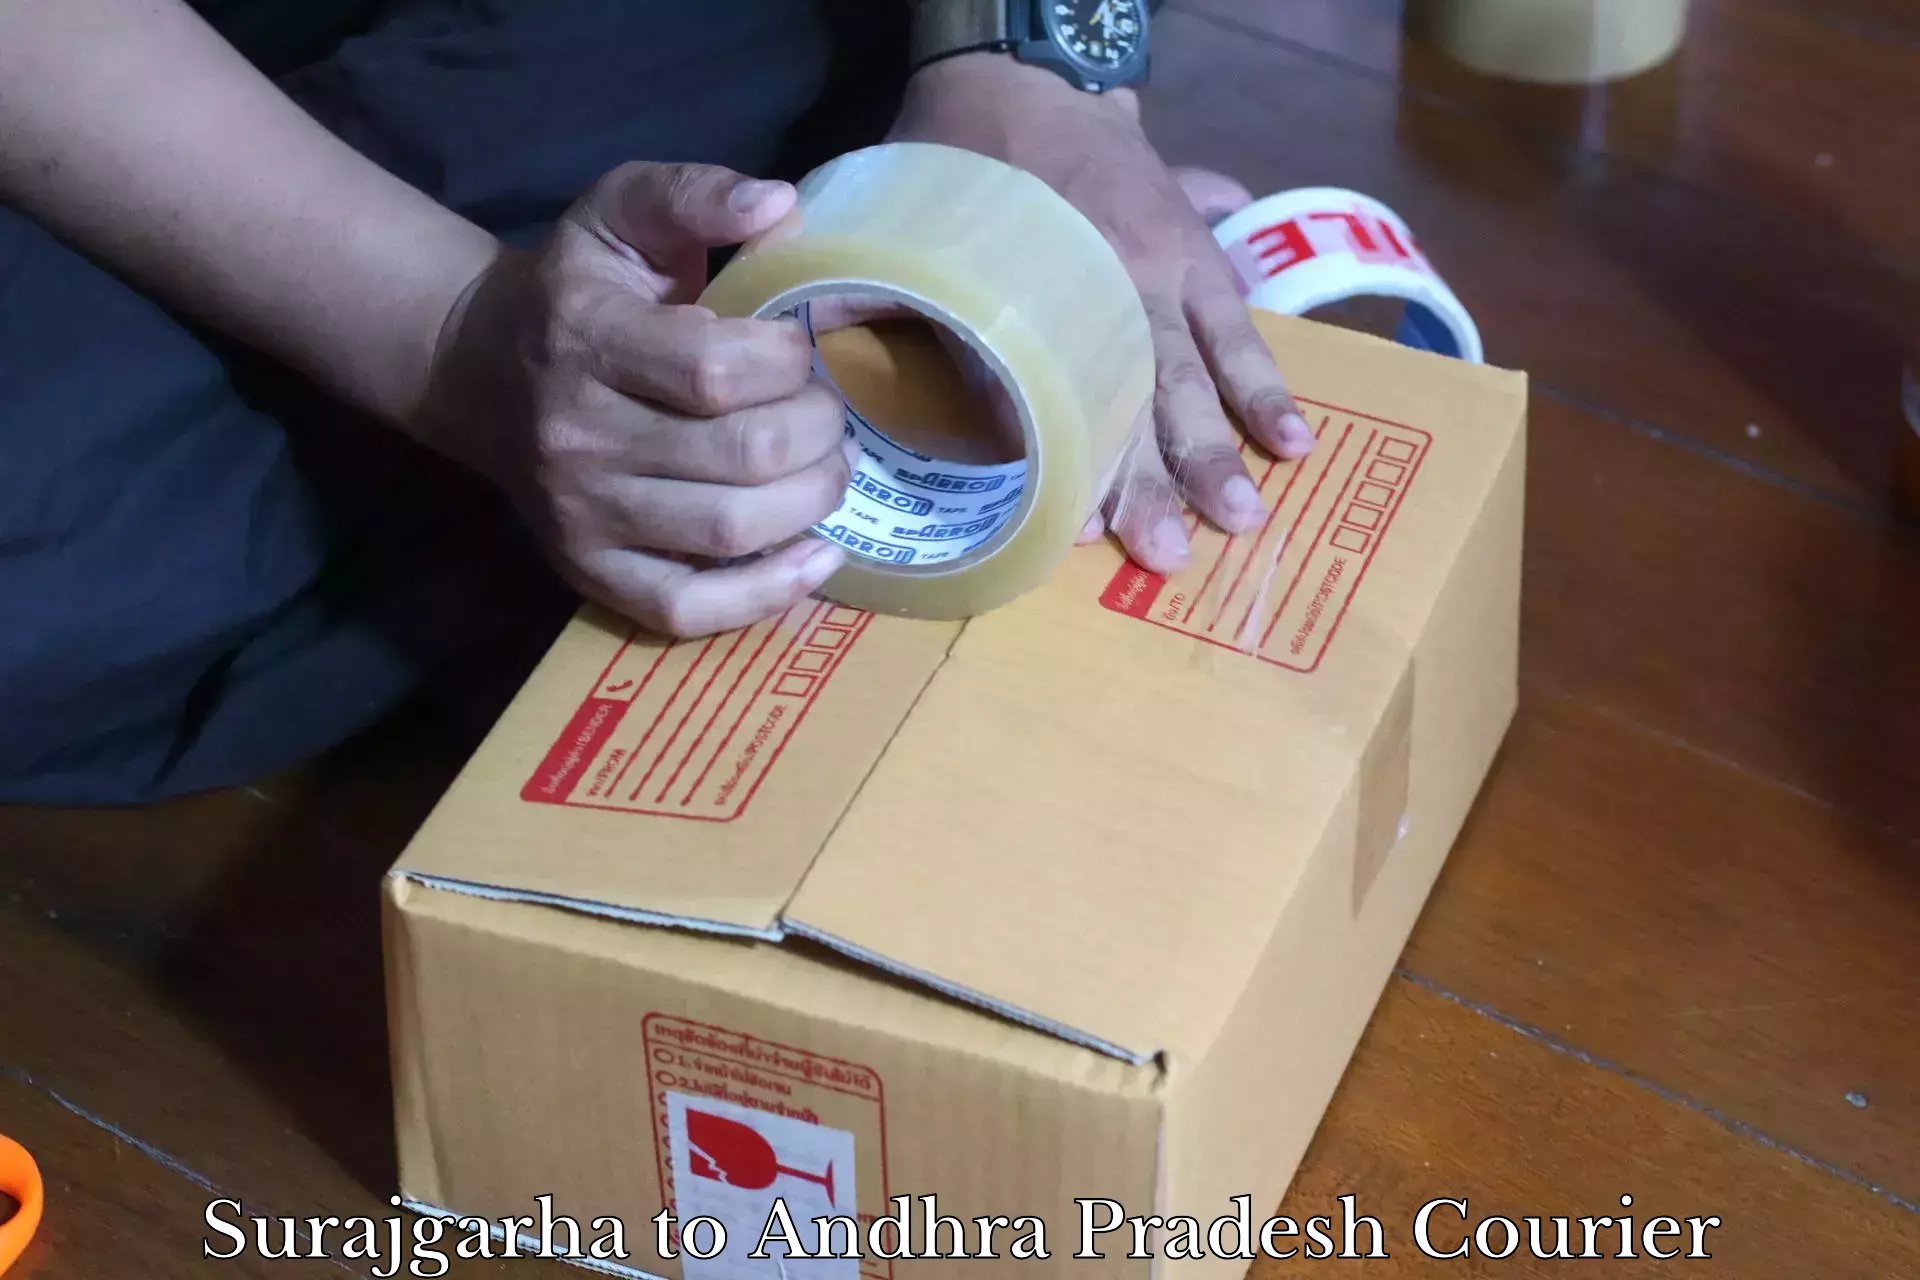 Professional parcel services Surajgarha to Mangalagiri